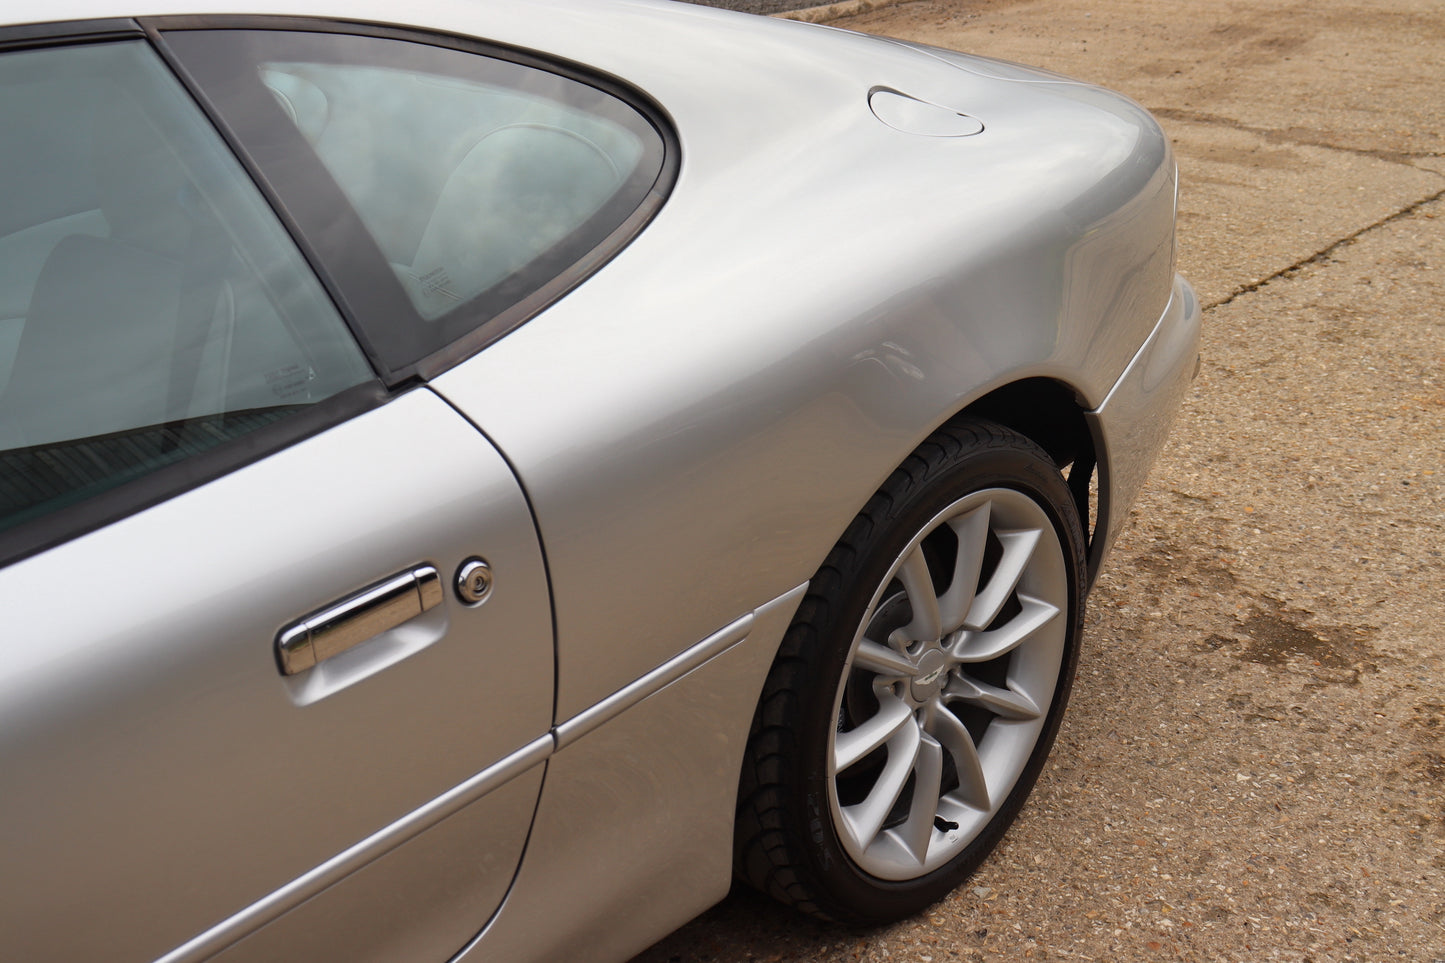 Aston Martin DB7 Vantage - Manual